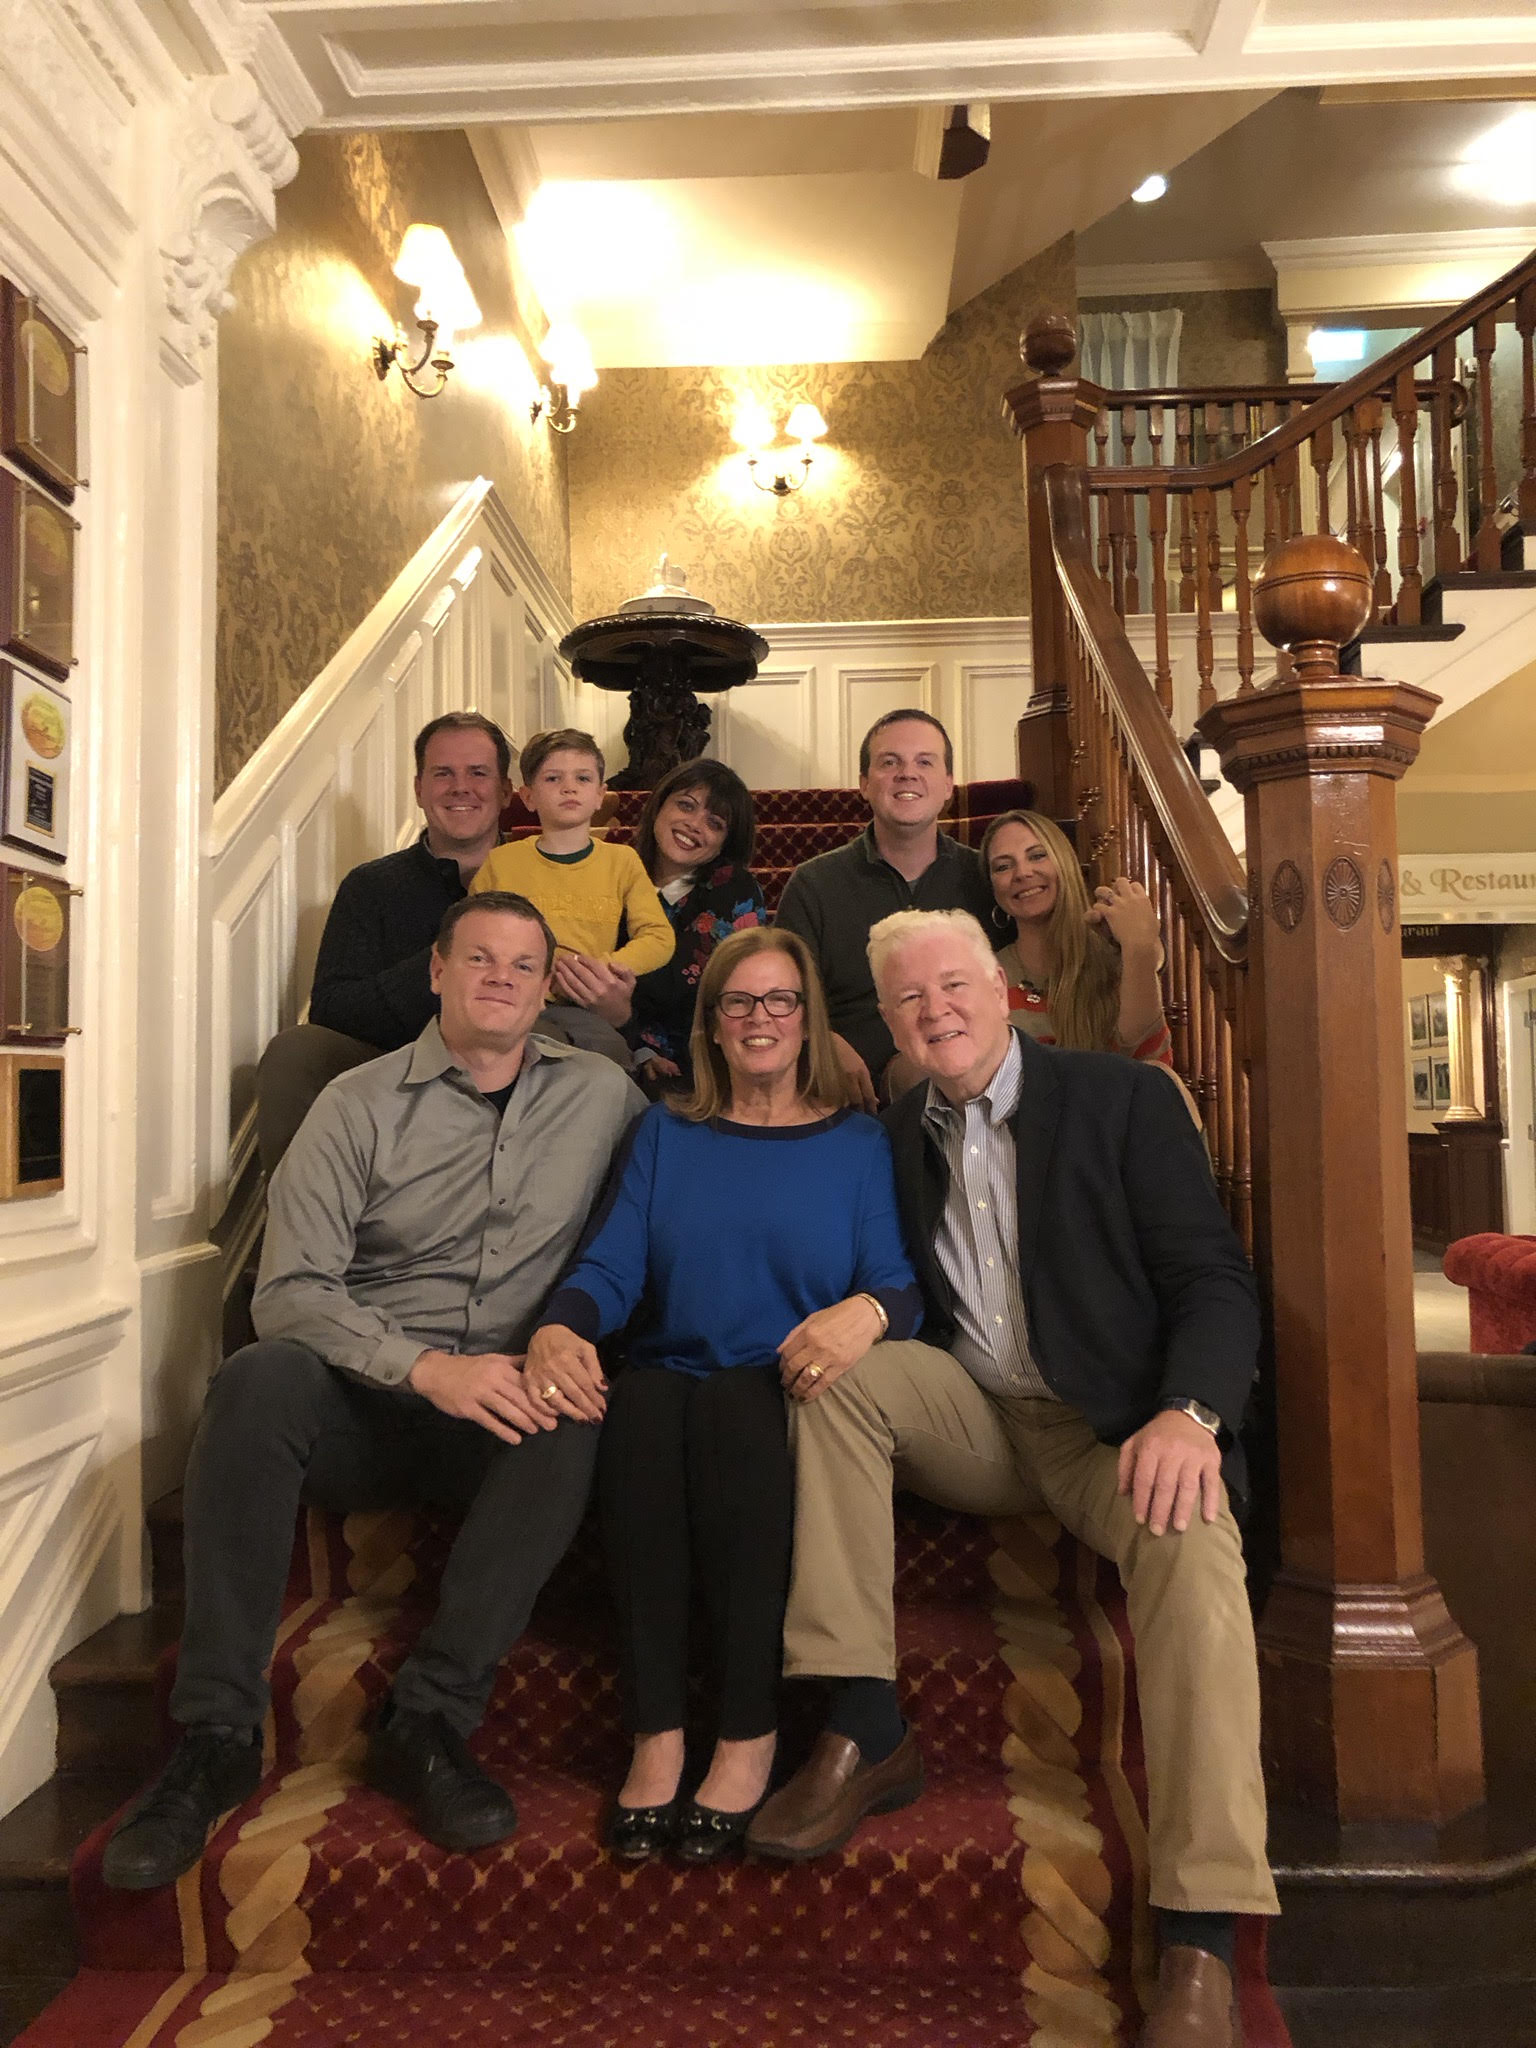 The McAuliffe family in Ireland